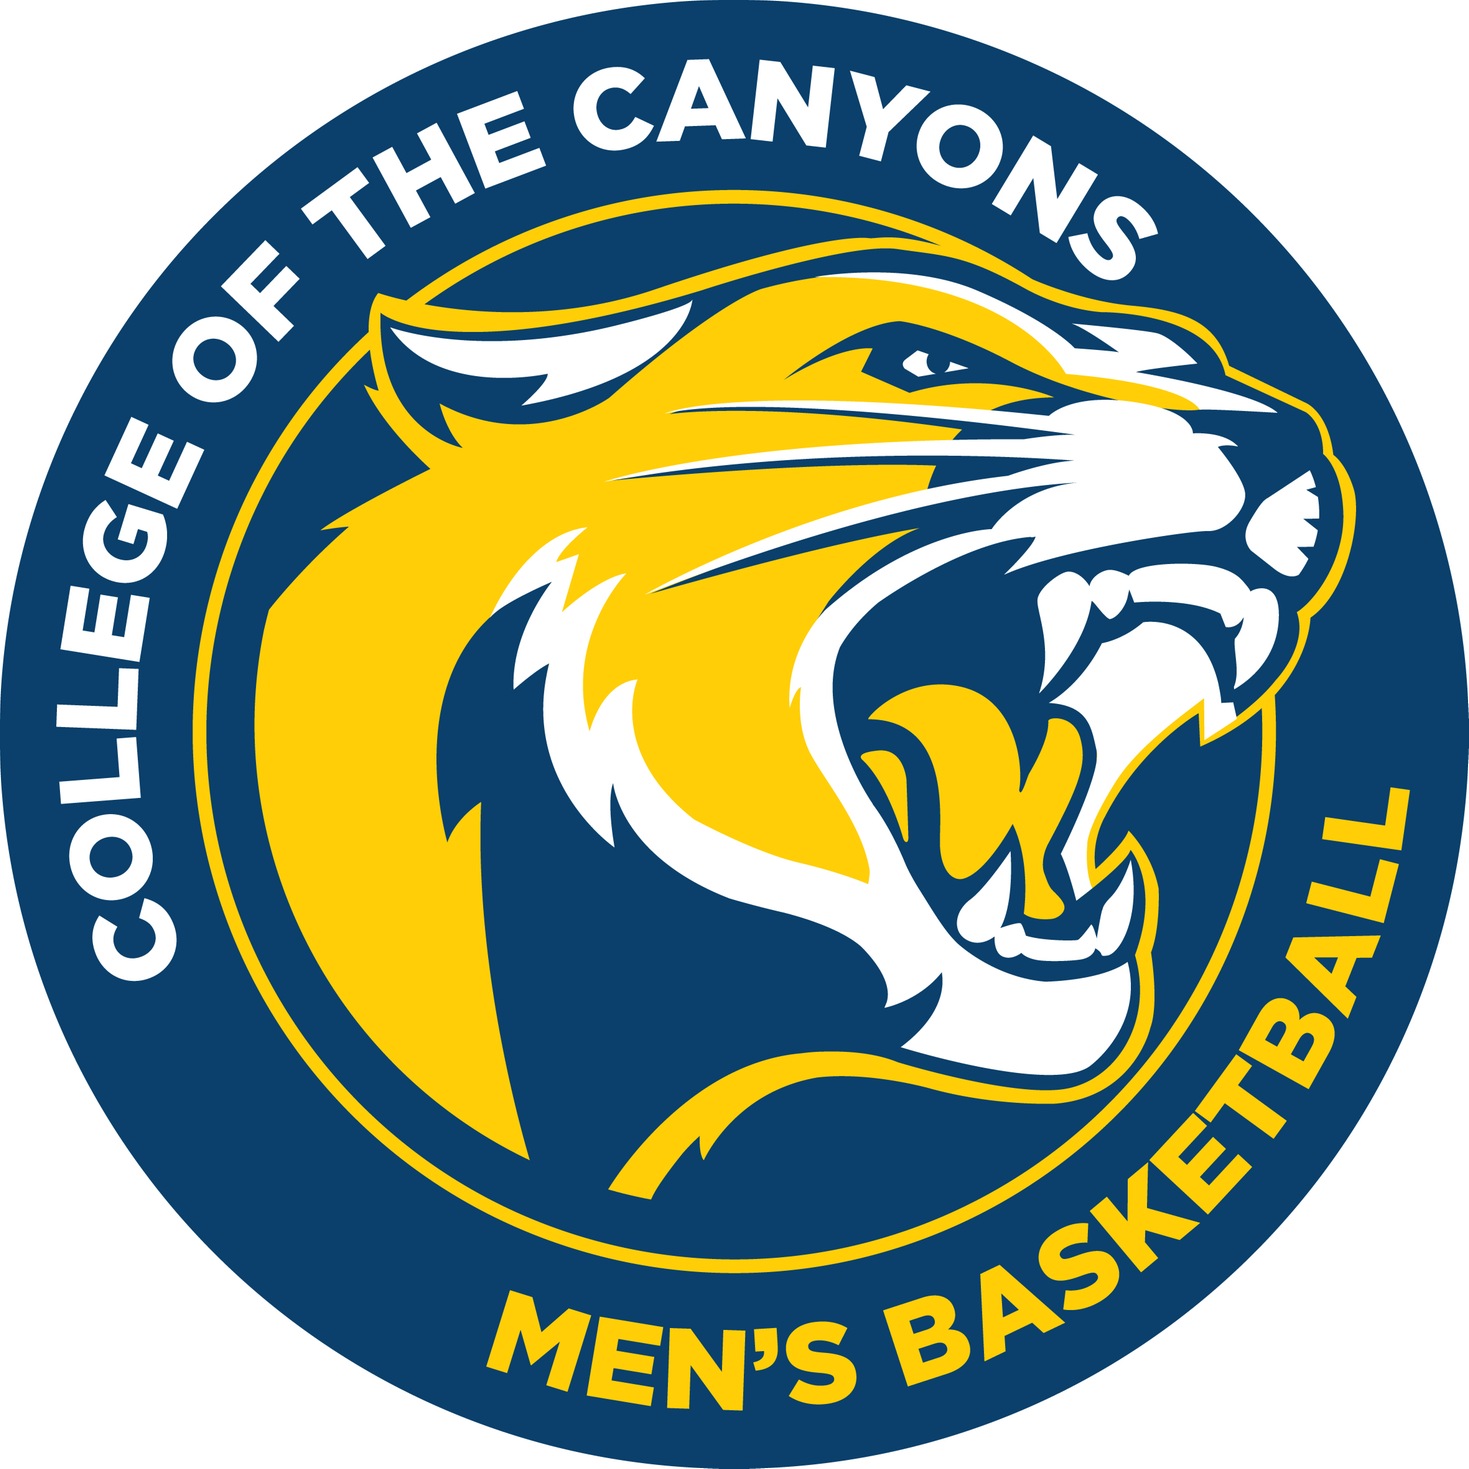 COC men's basketball logo.